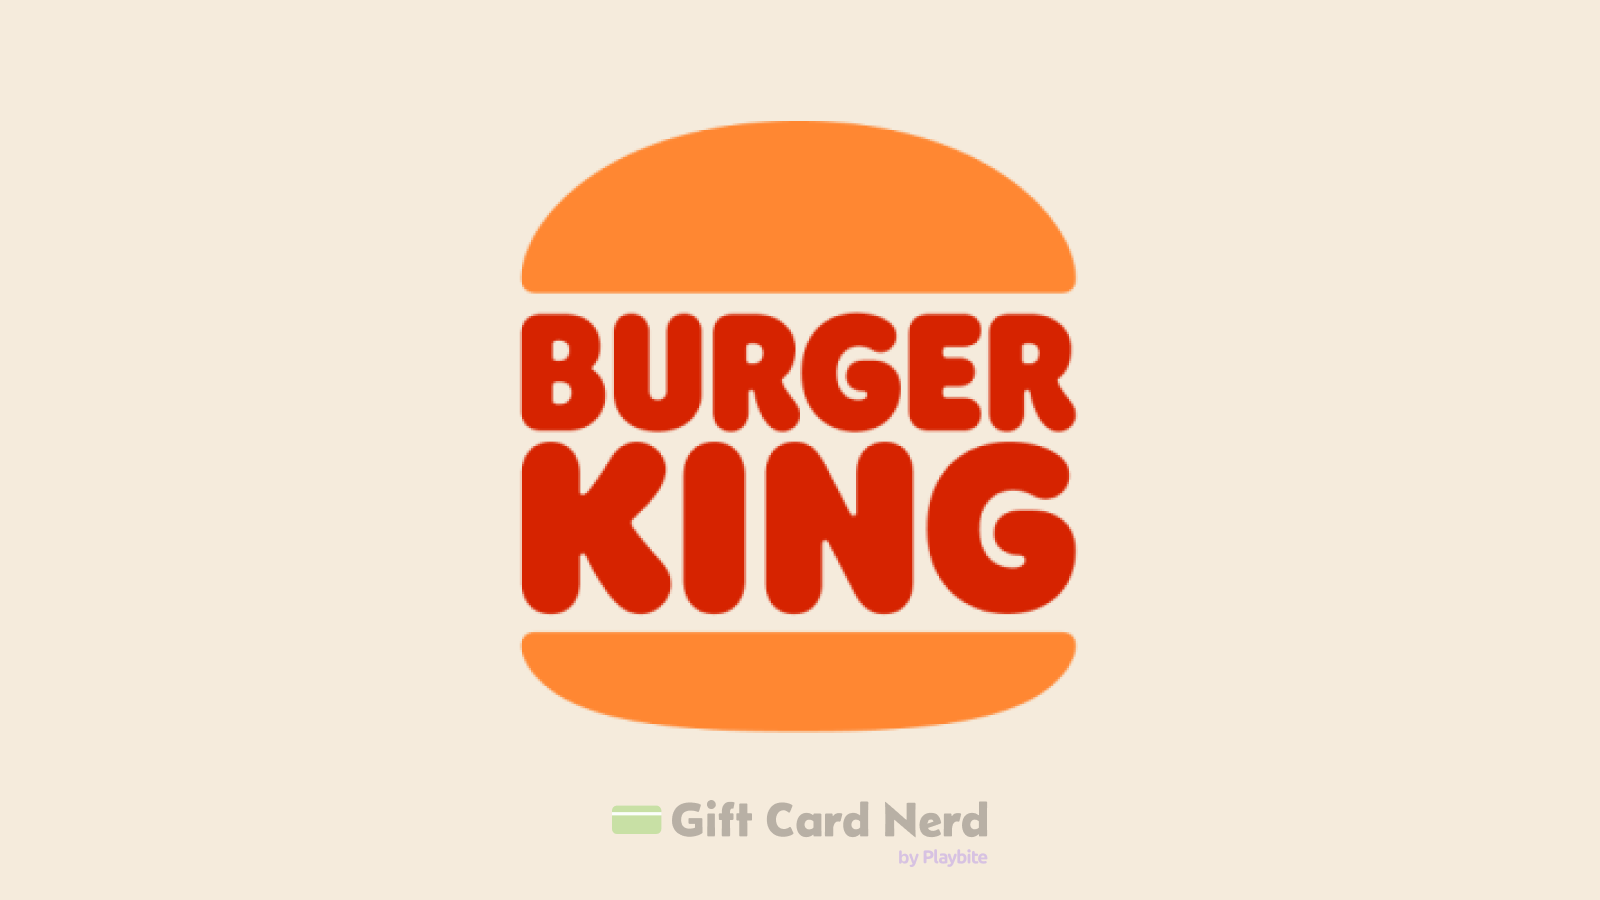 Can You Buy Burger King Gift Cards at Walmart?